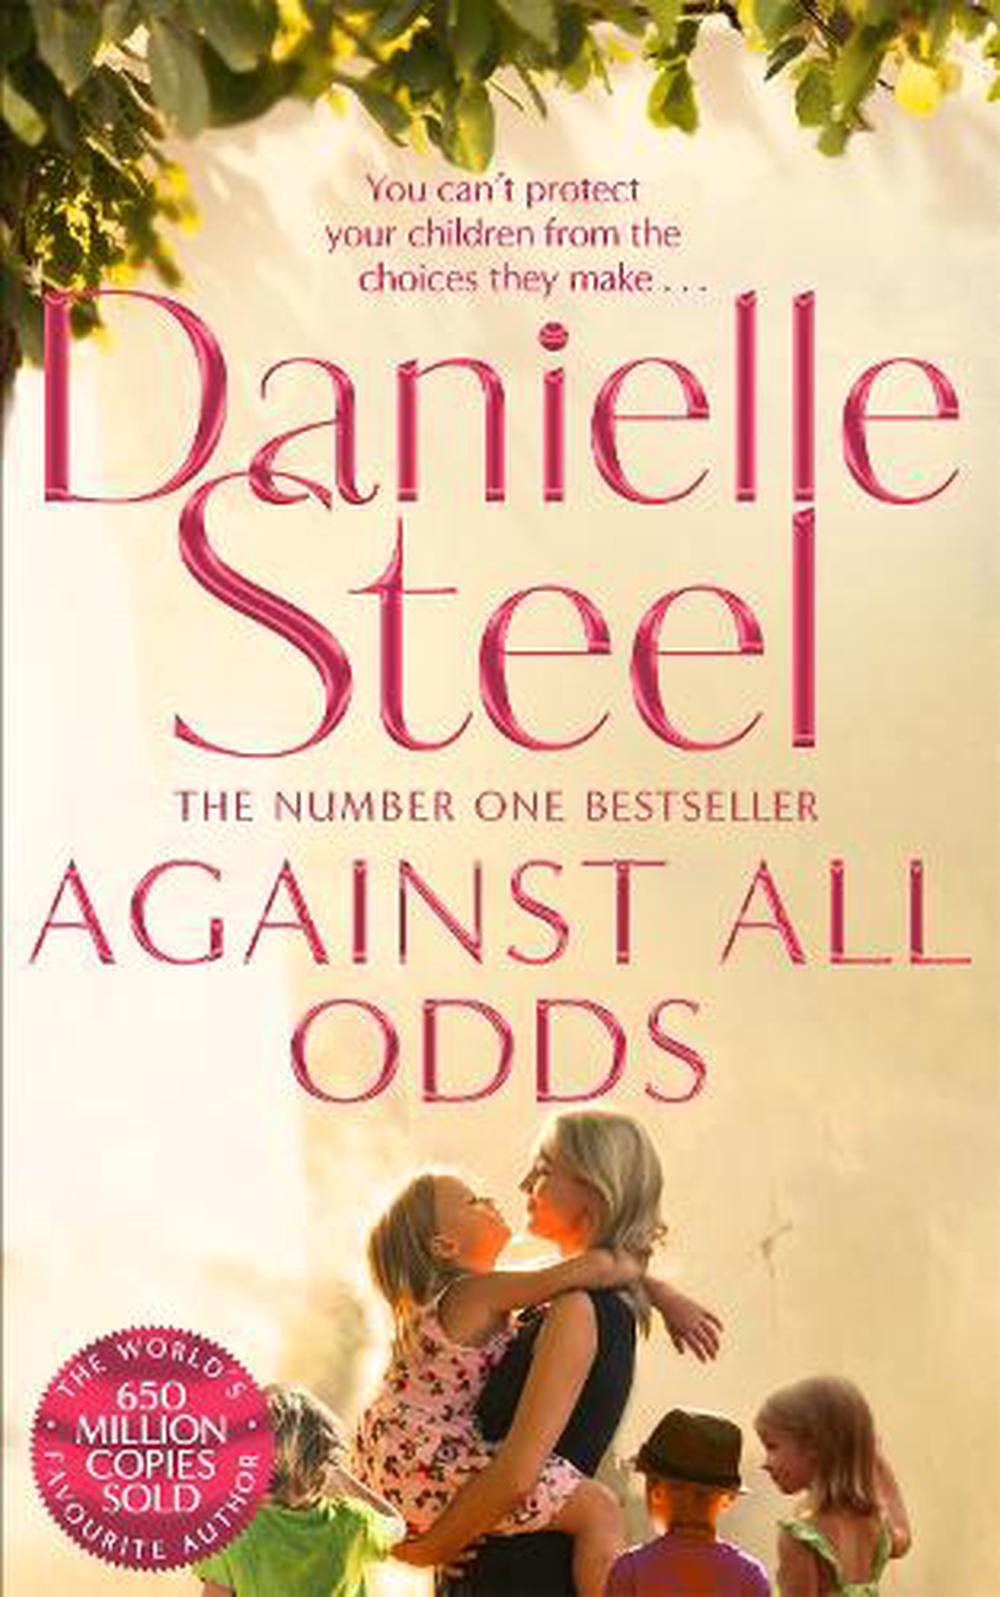 Against All Odds by Danielle Steel, Paperback, 9781509800223 Buy